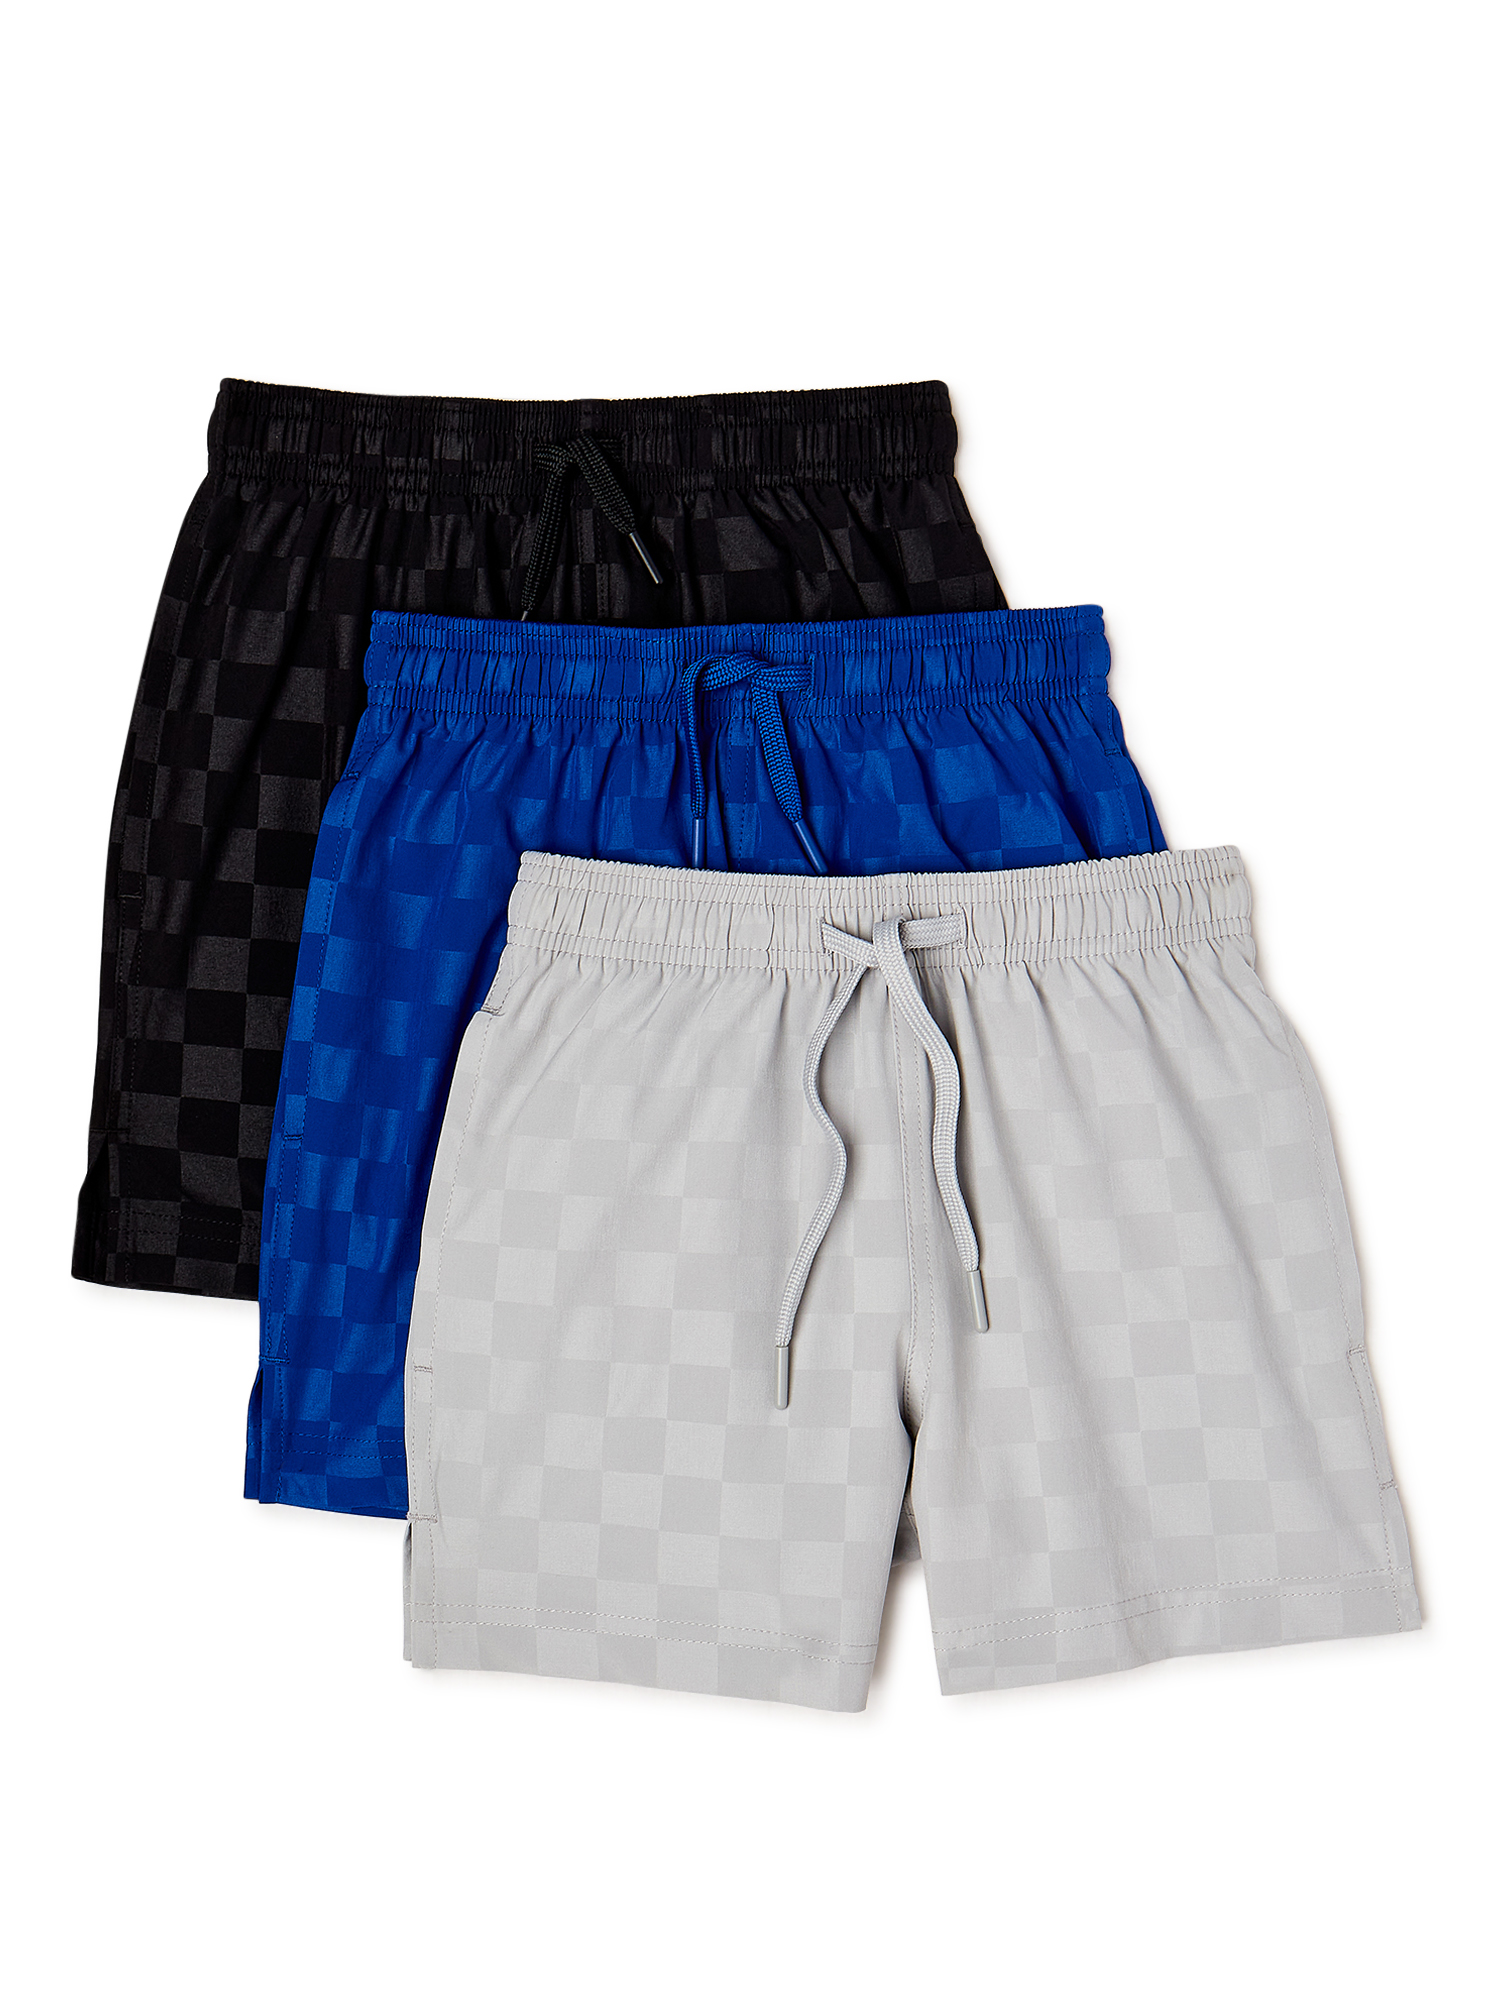 Athletic Works Boys Soccer Shorts, 3-Pack, Sizes 4-18 & Husky - image 1 of 3